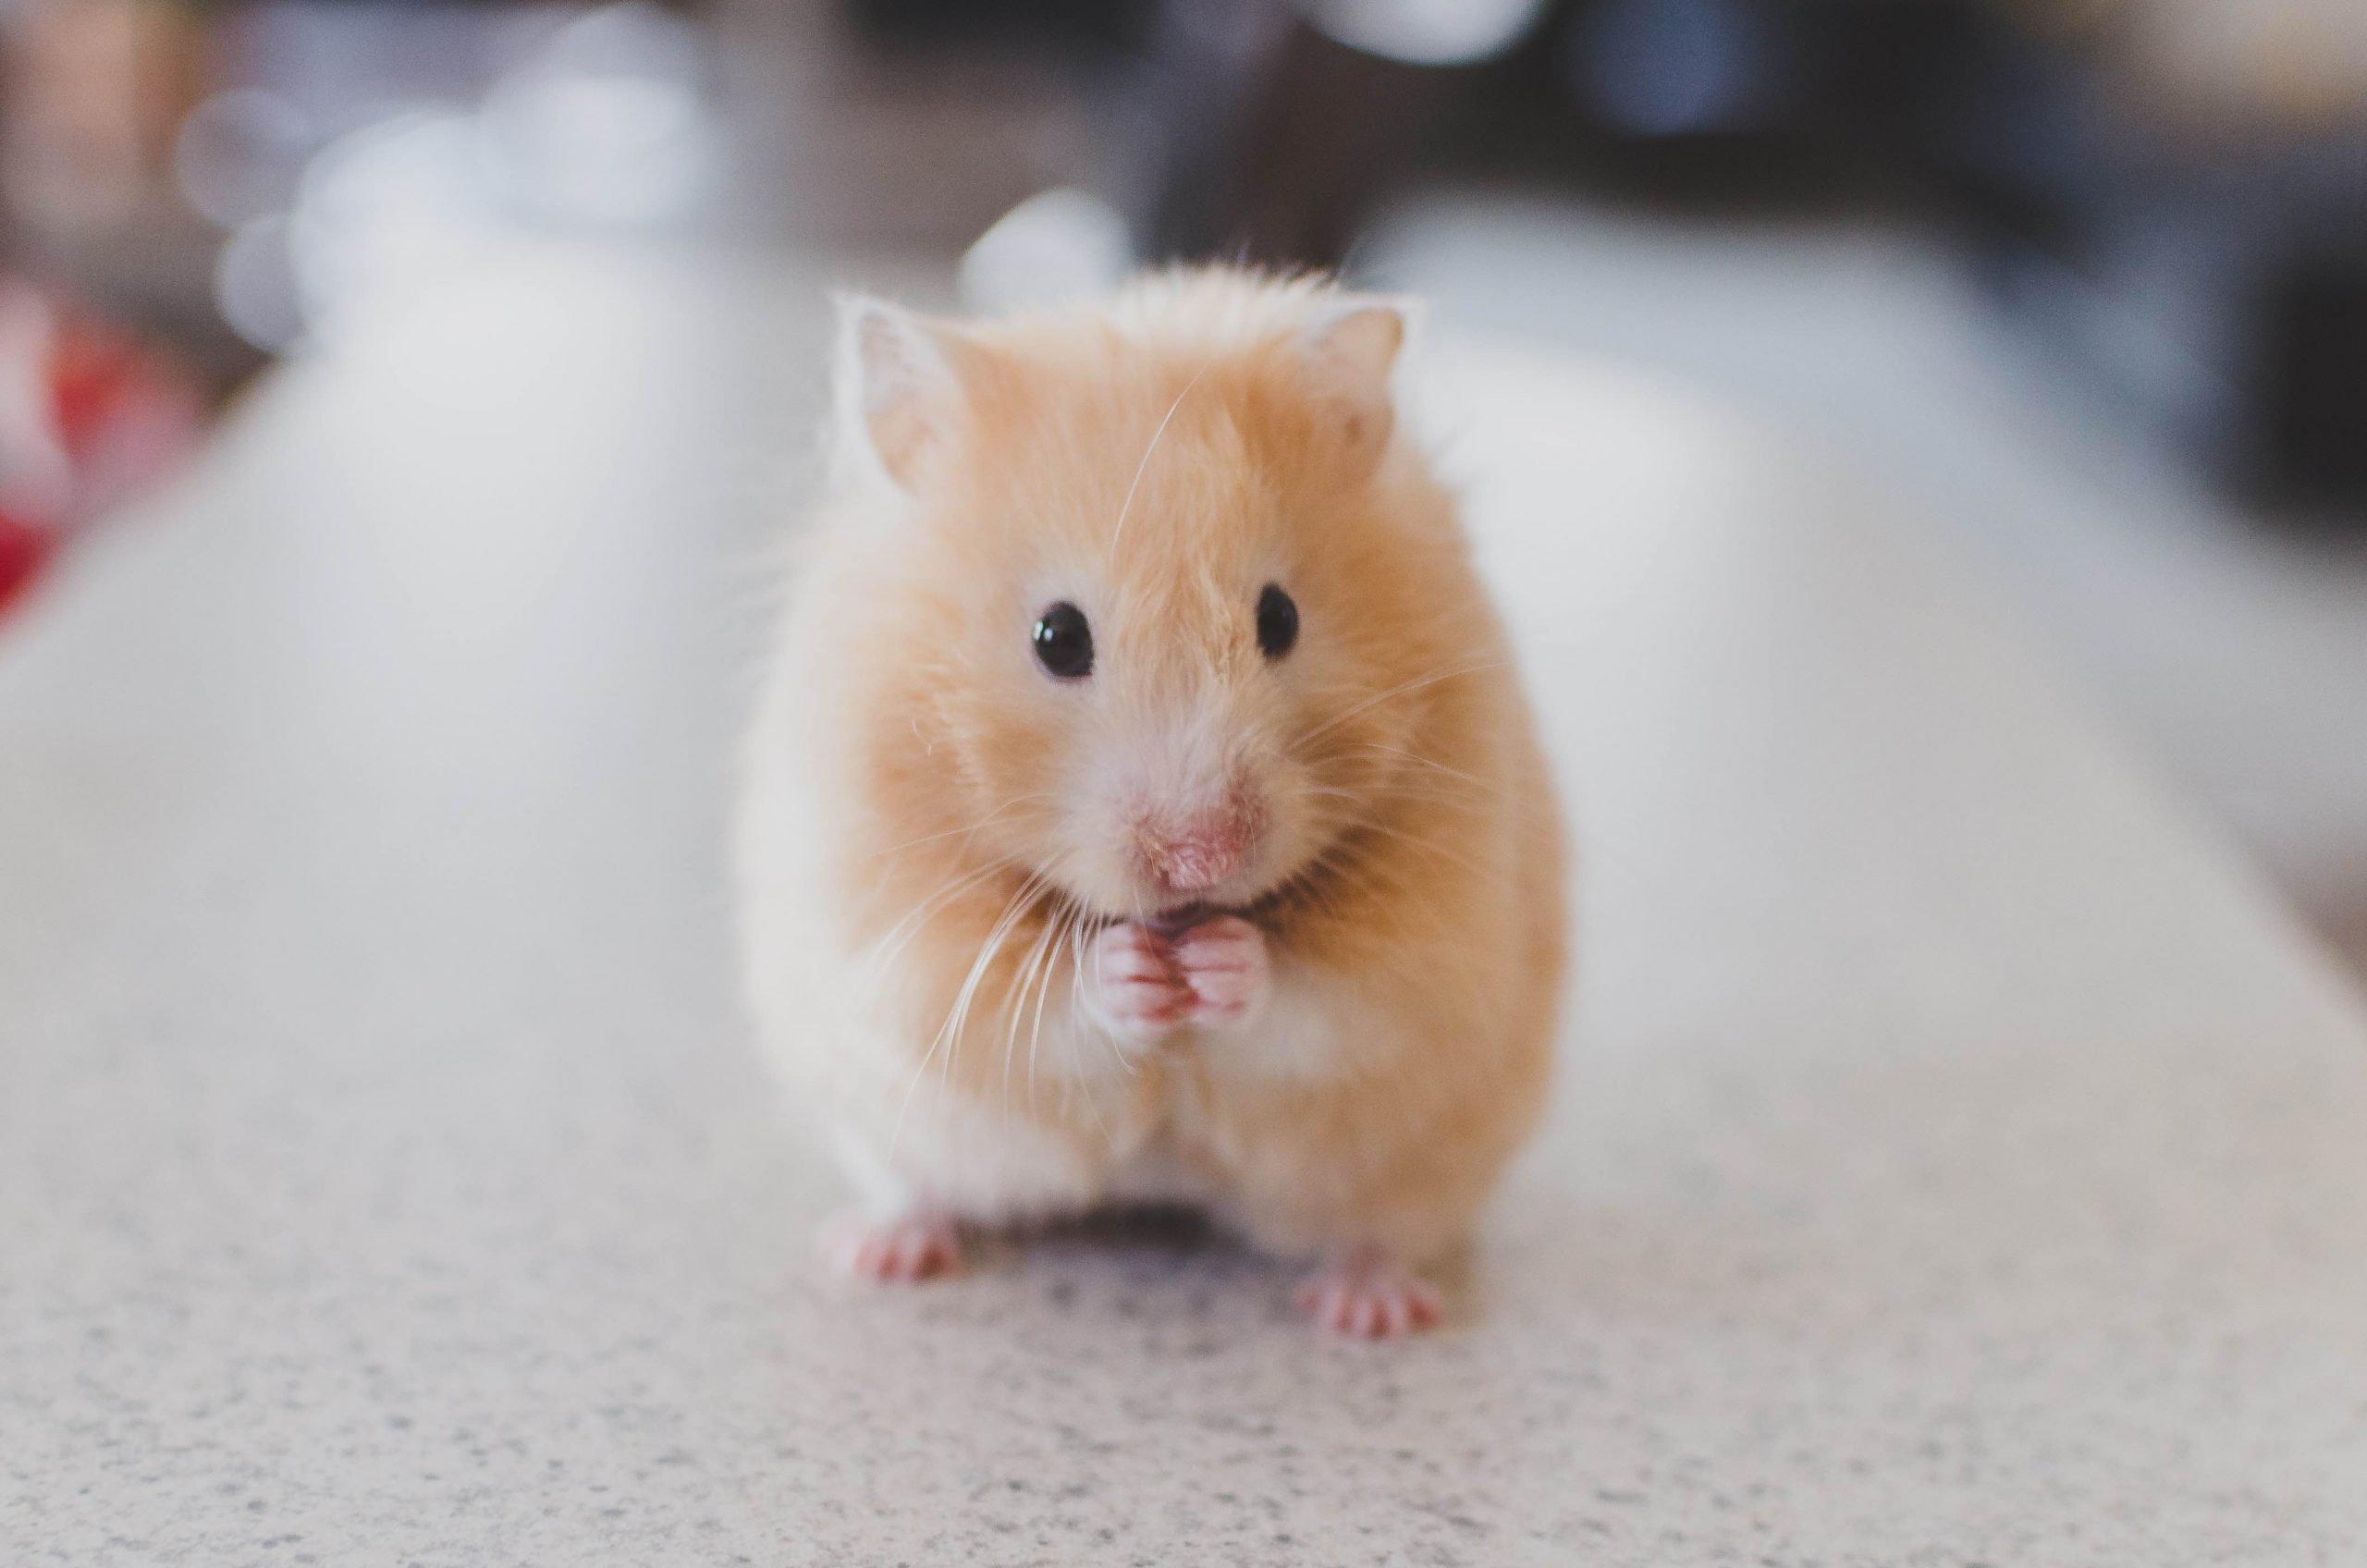 Hair regeneration in mice